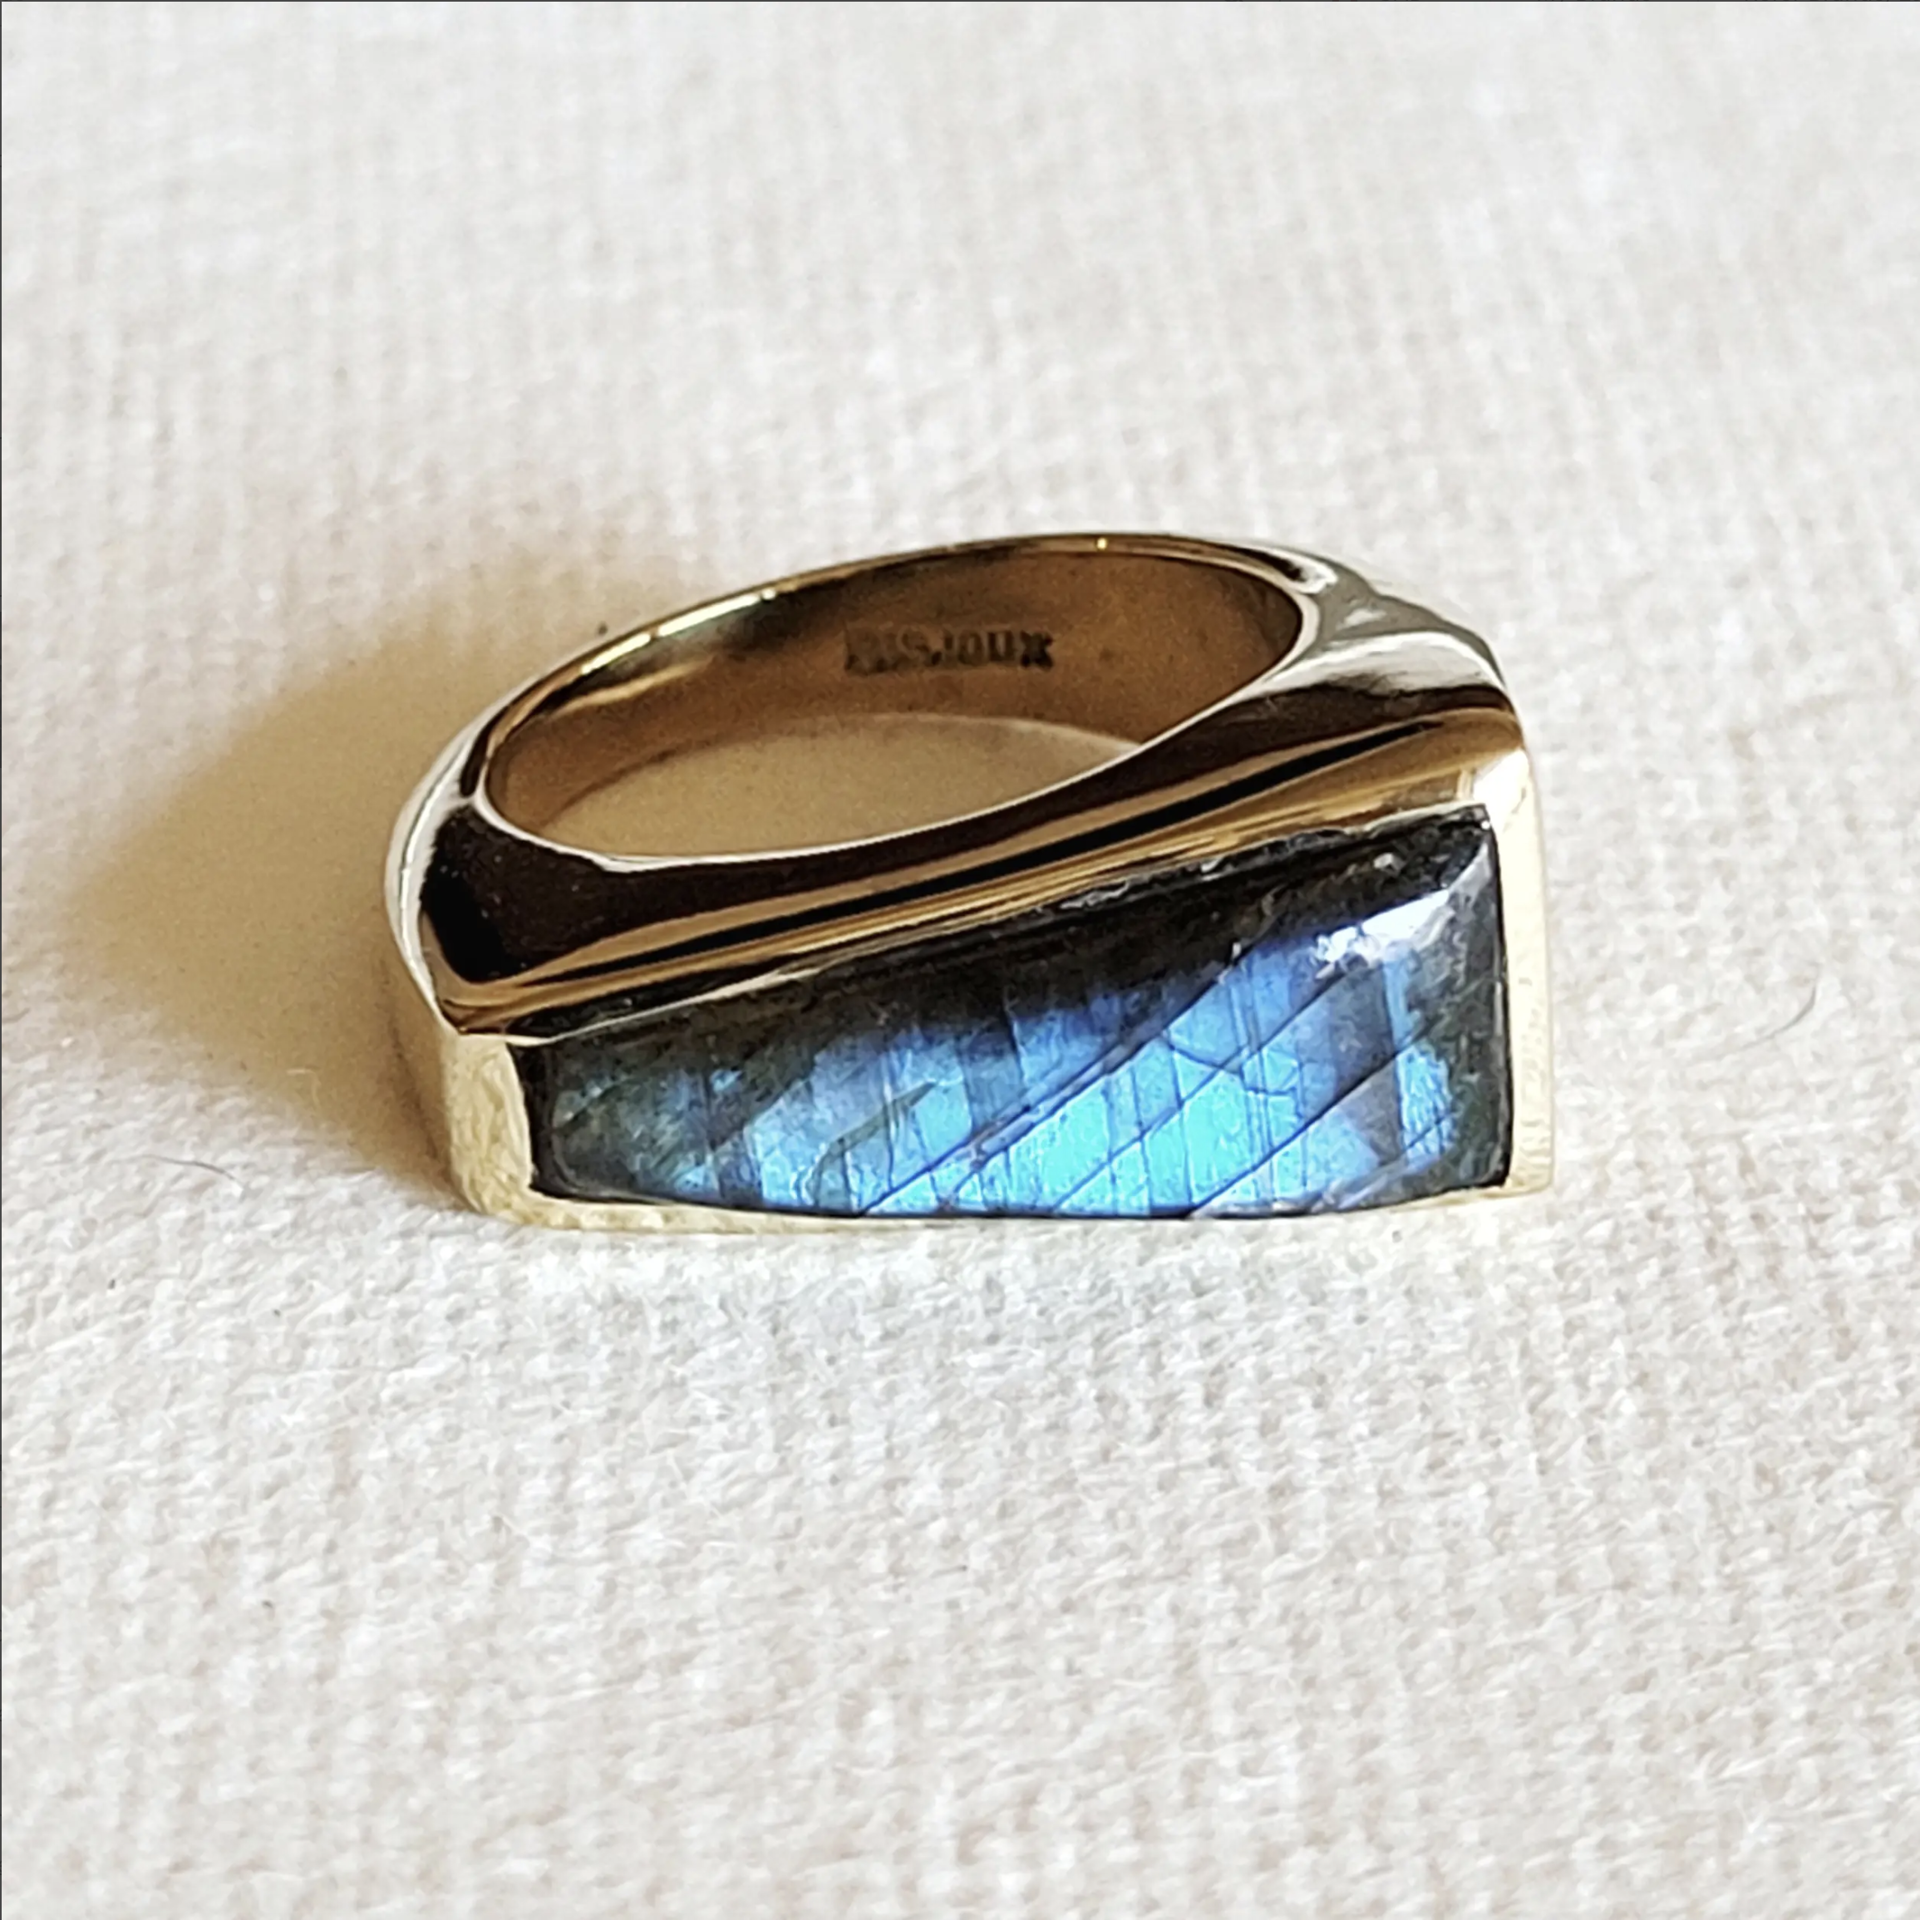 Labradorite Dream Ring by Bisjoux